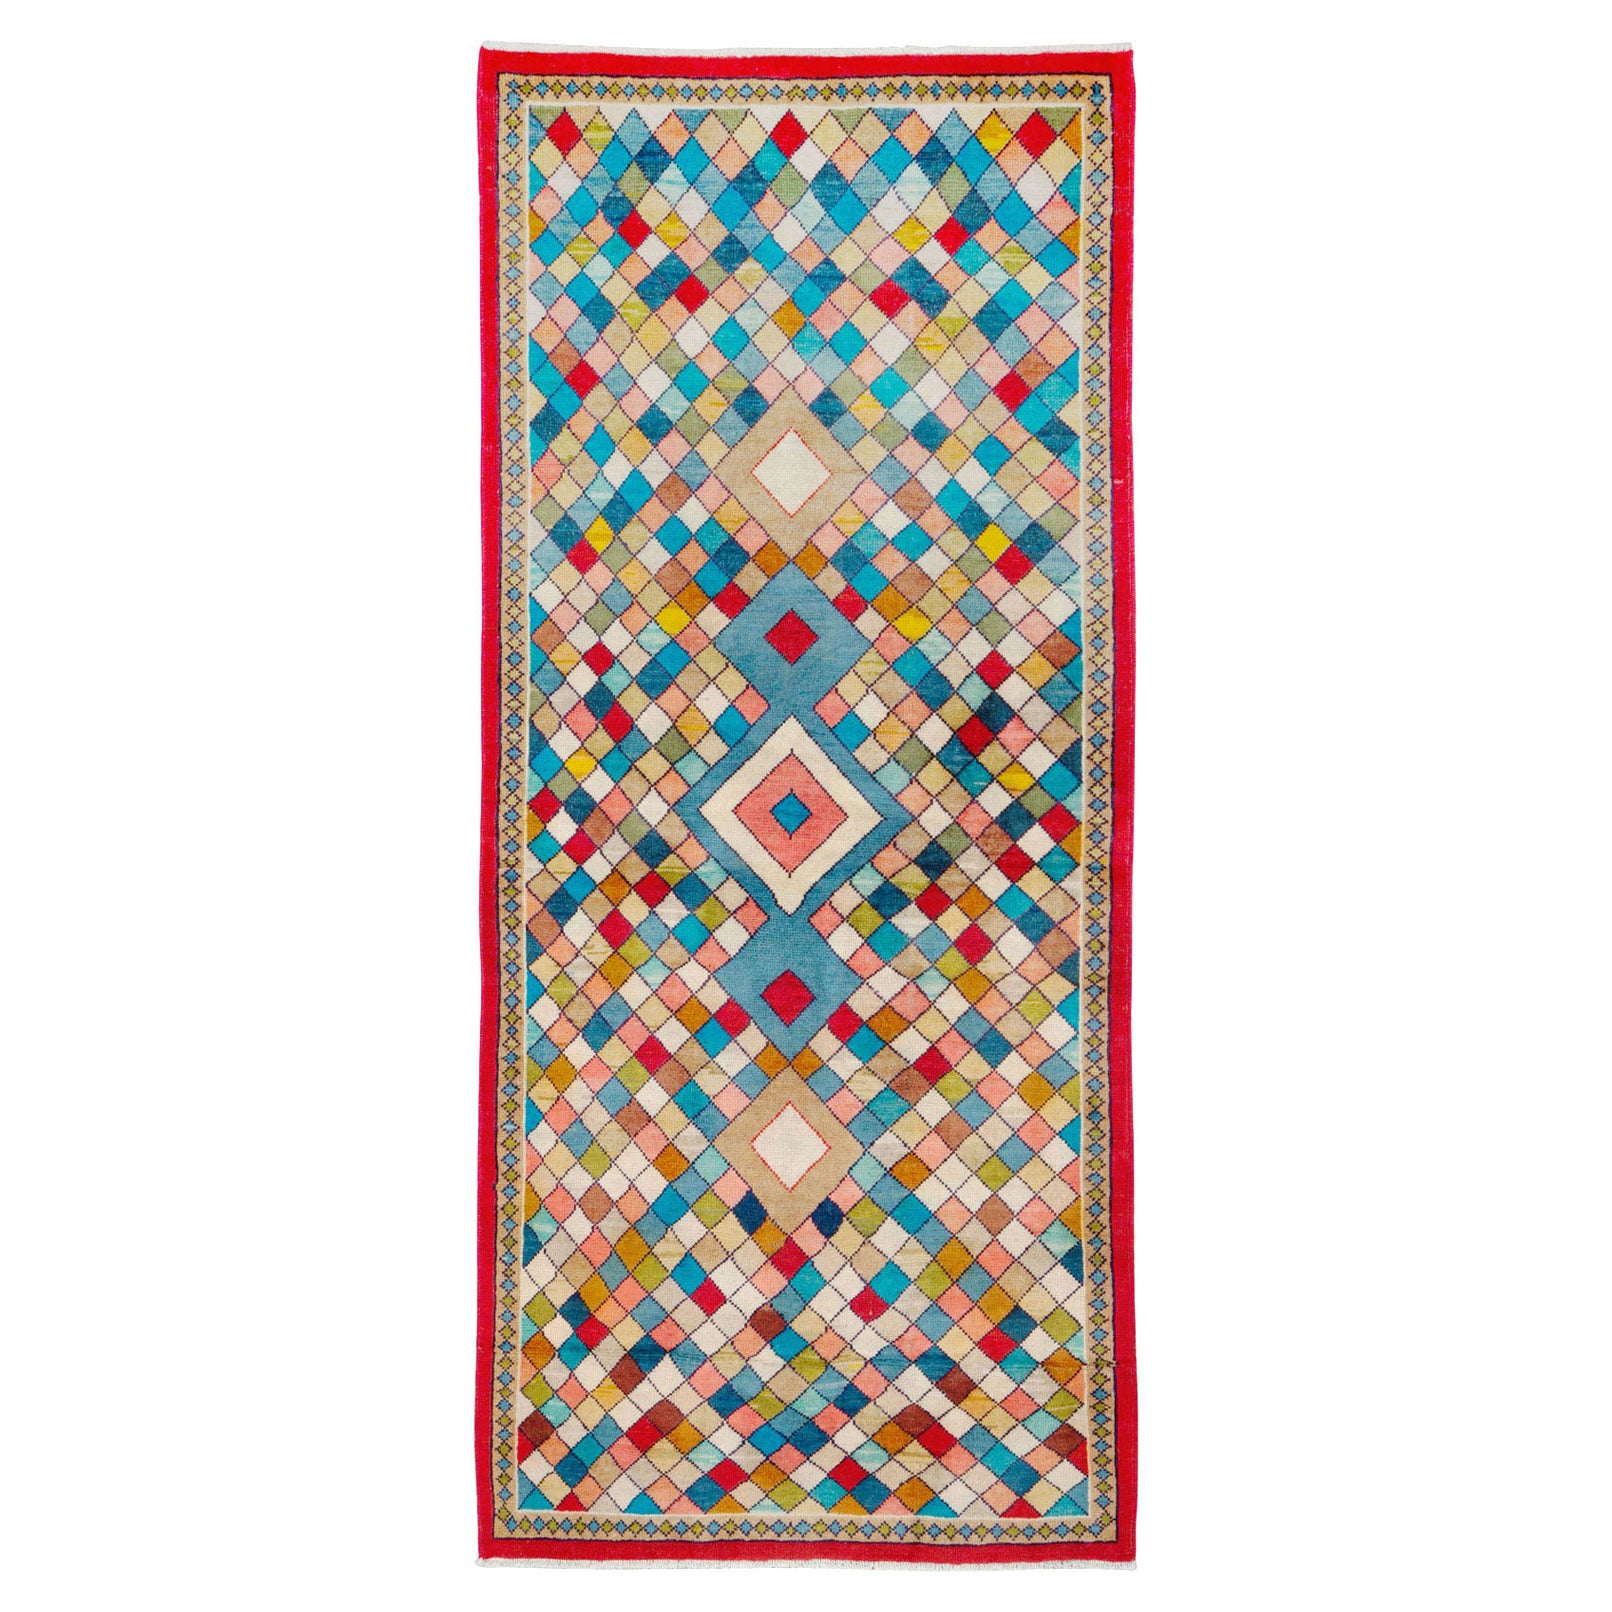 Mid-20th Century Handmade Persian Art Deco Style Mahal Throw Rug